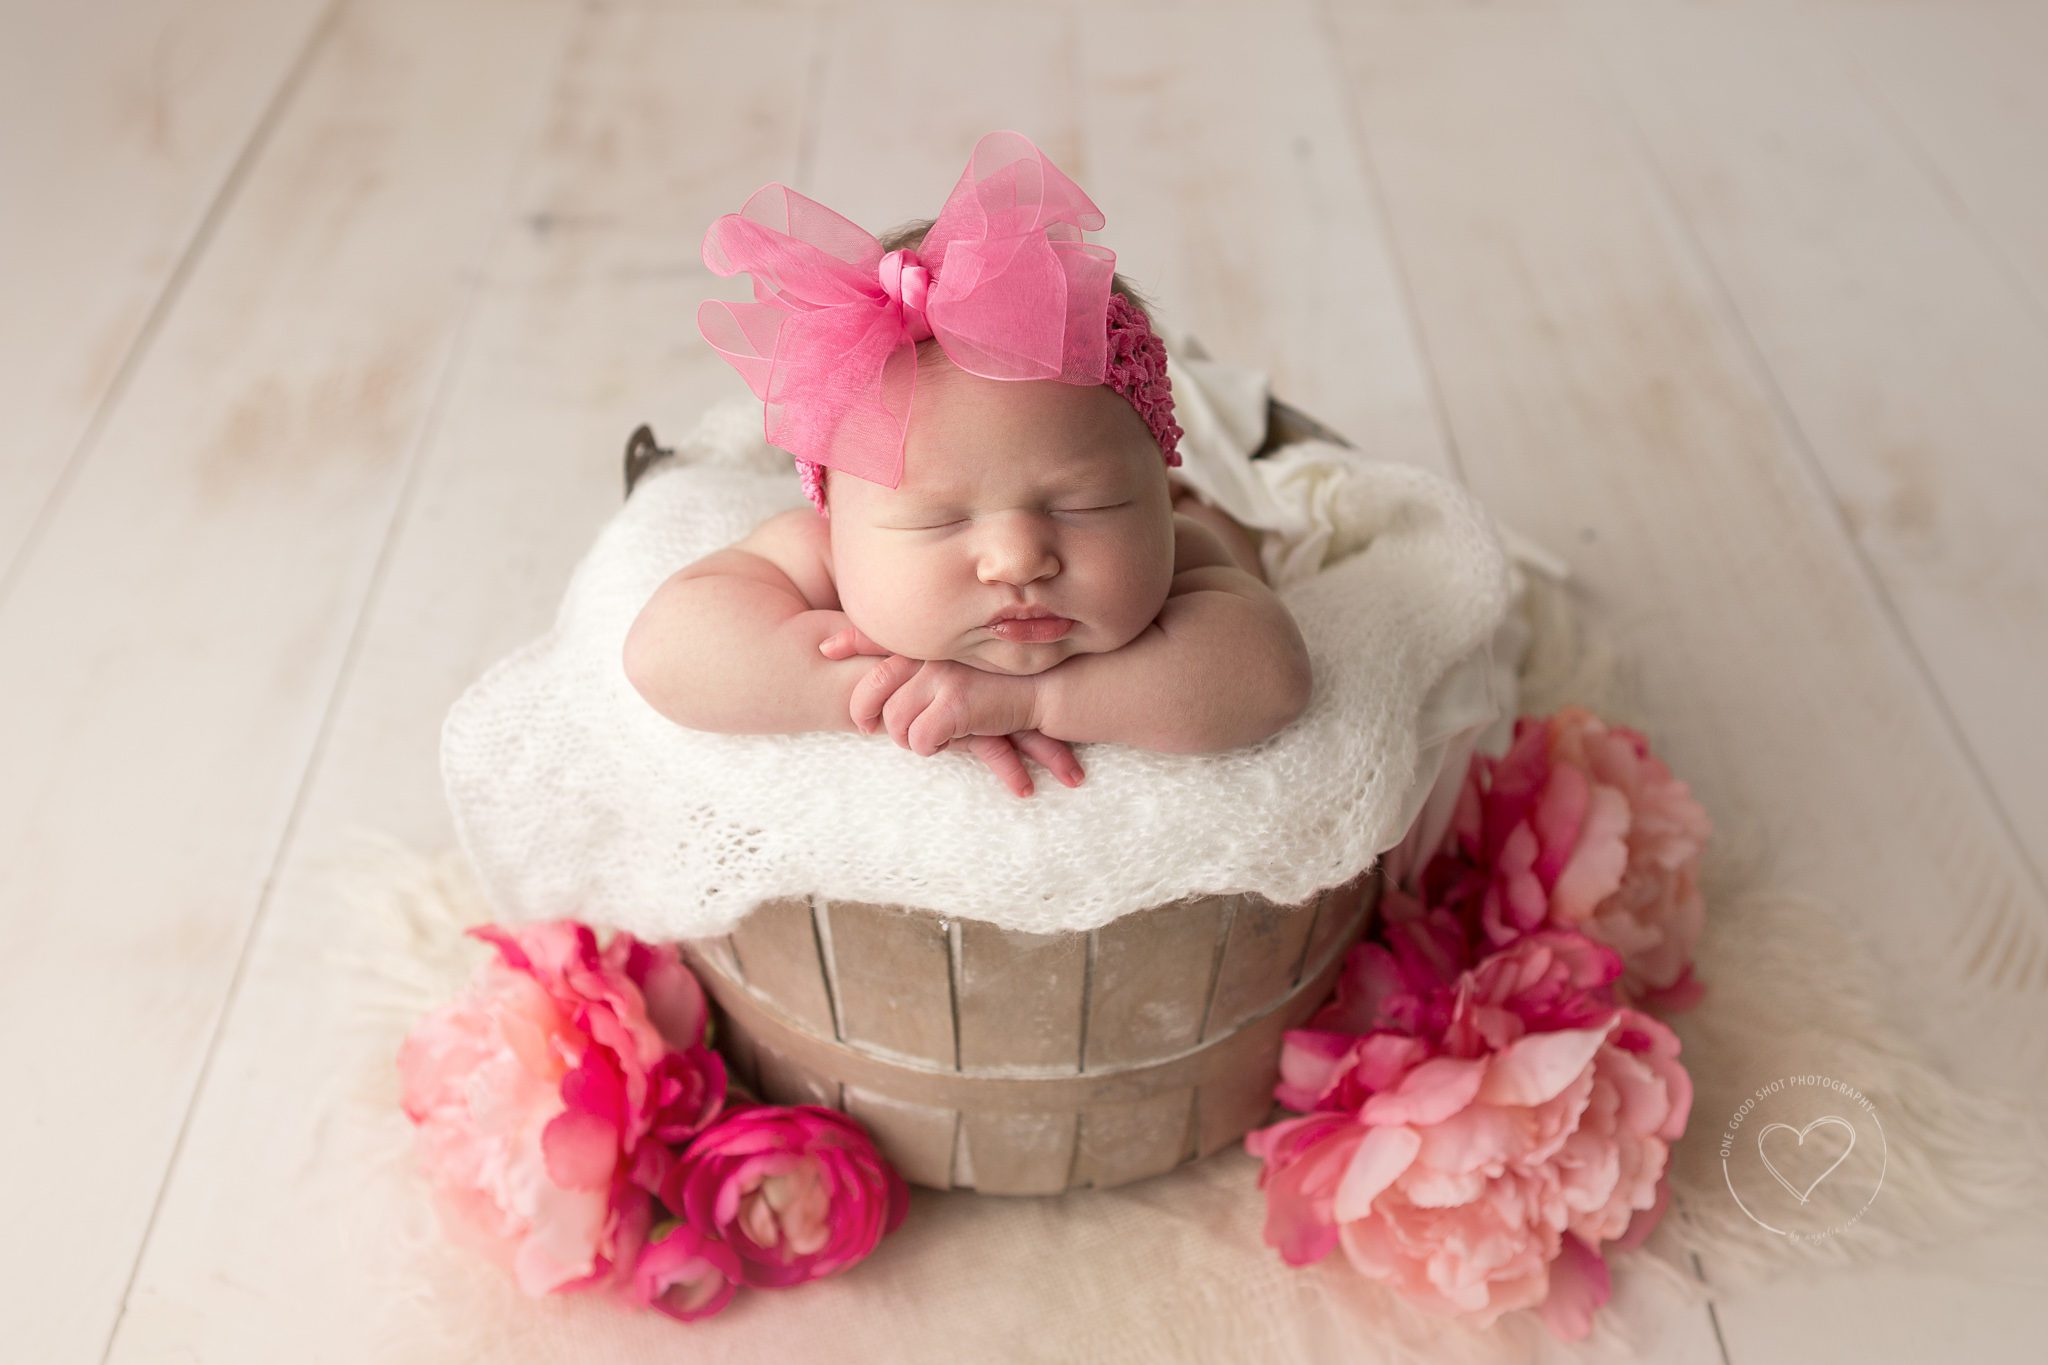 newborn girl, head on hands, bucket pose, vintage bucket, white overlay, big pink bow, pink flowers around bucket